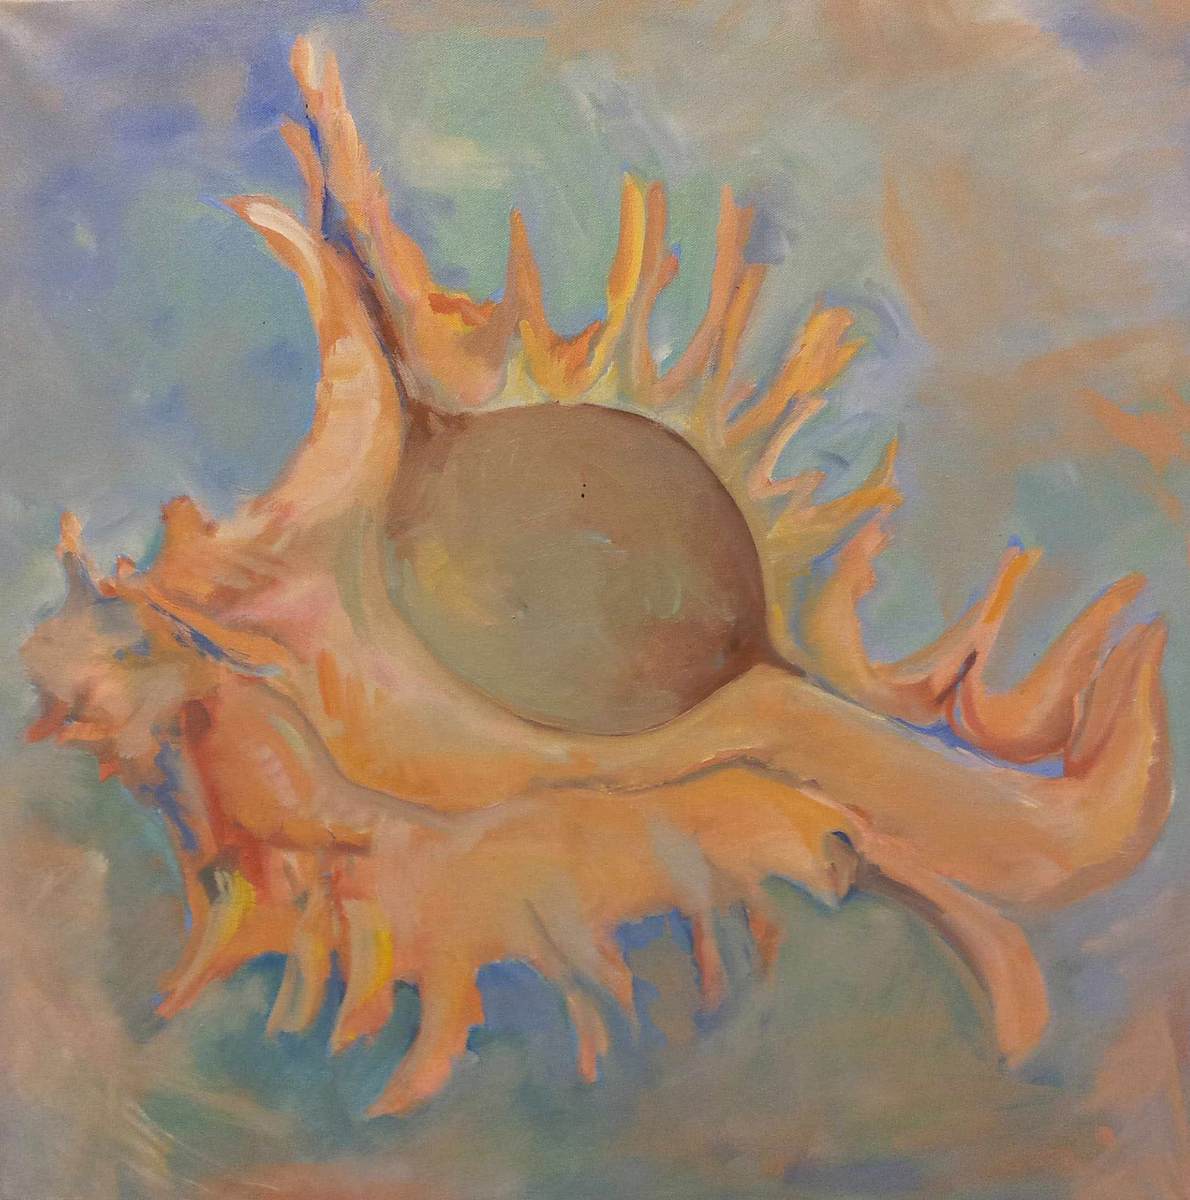 "Kent's Conch" oil on canvas, 2x2 ft, 61x61 cm